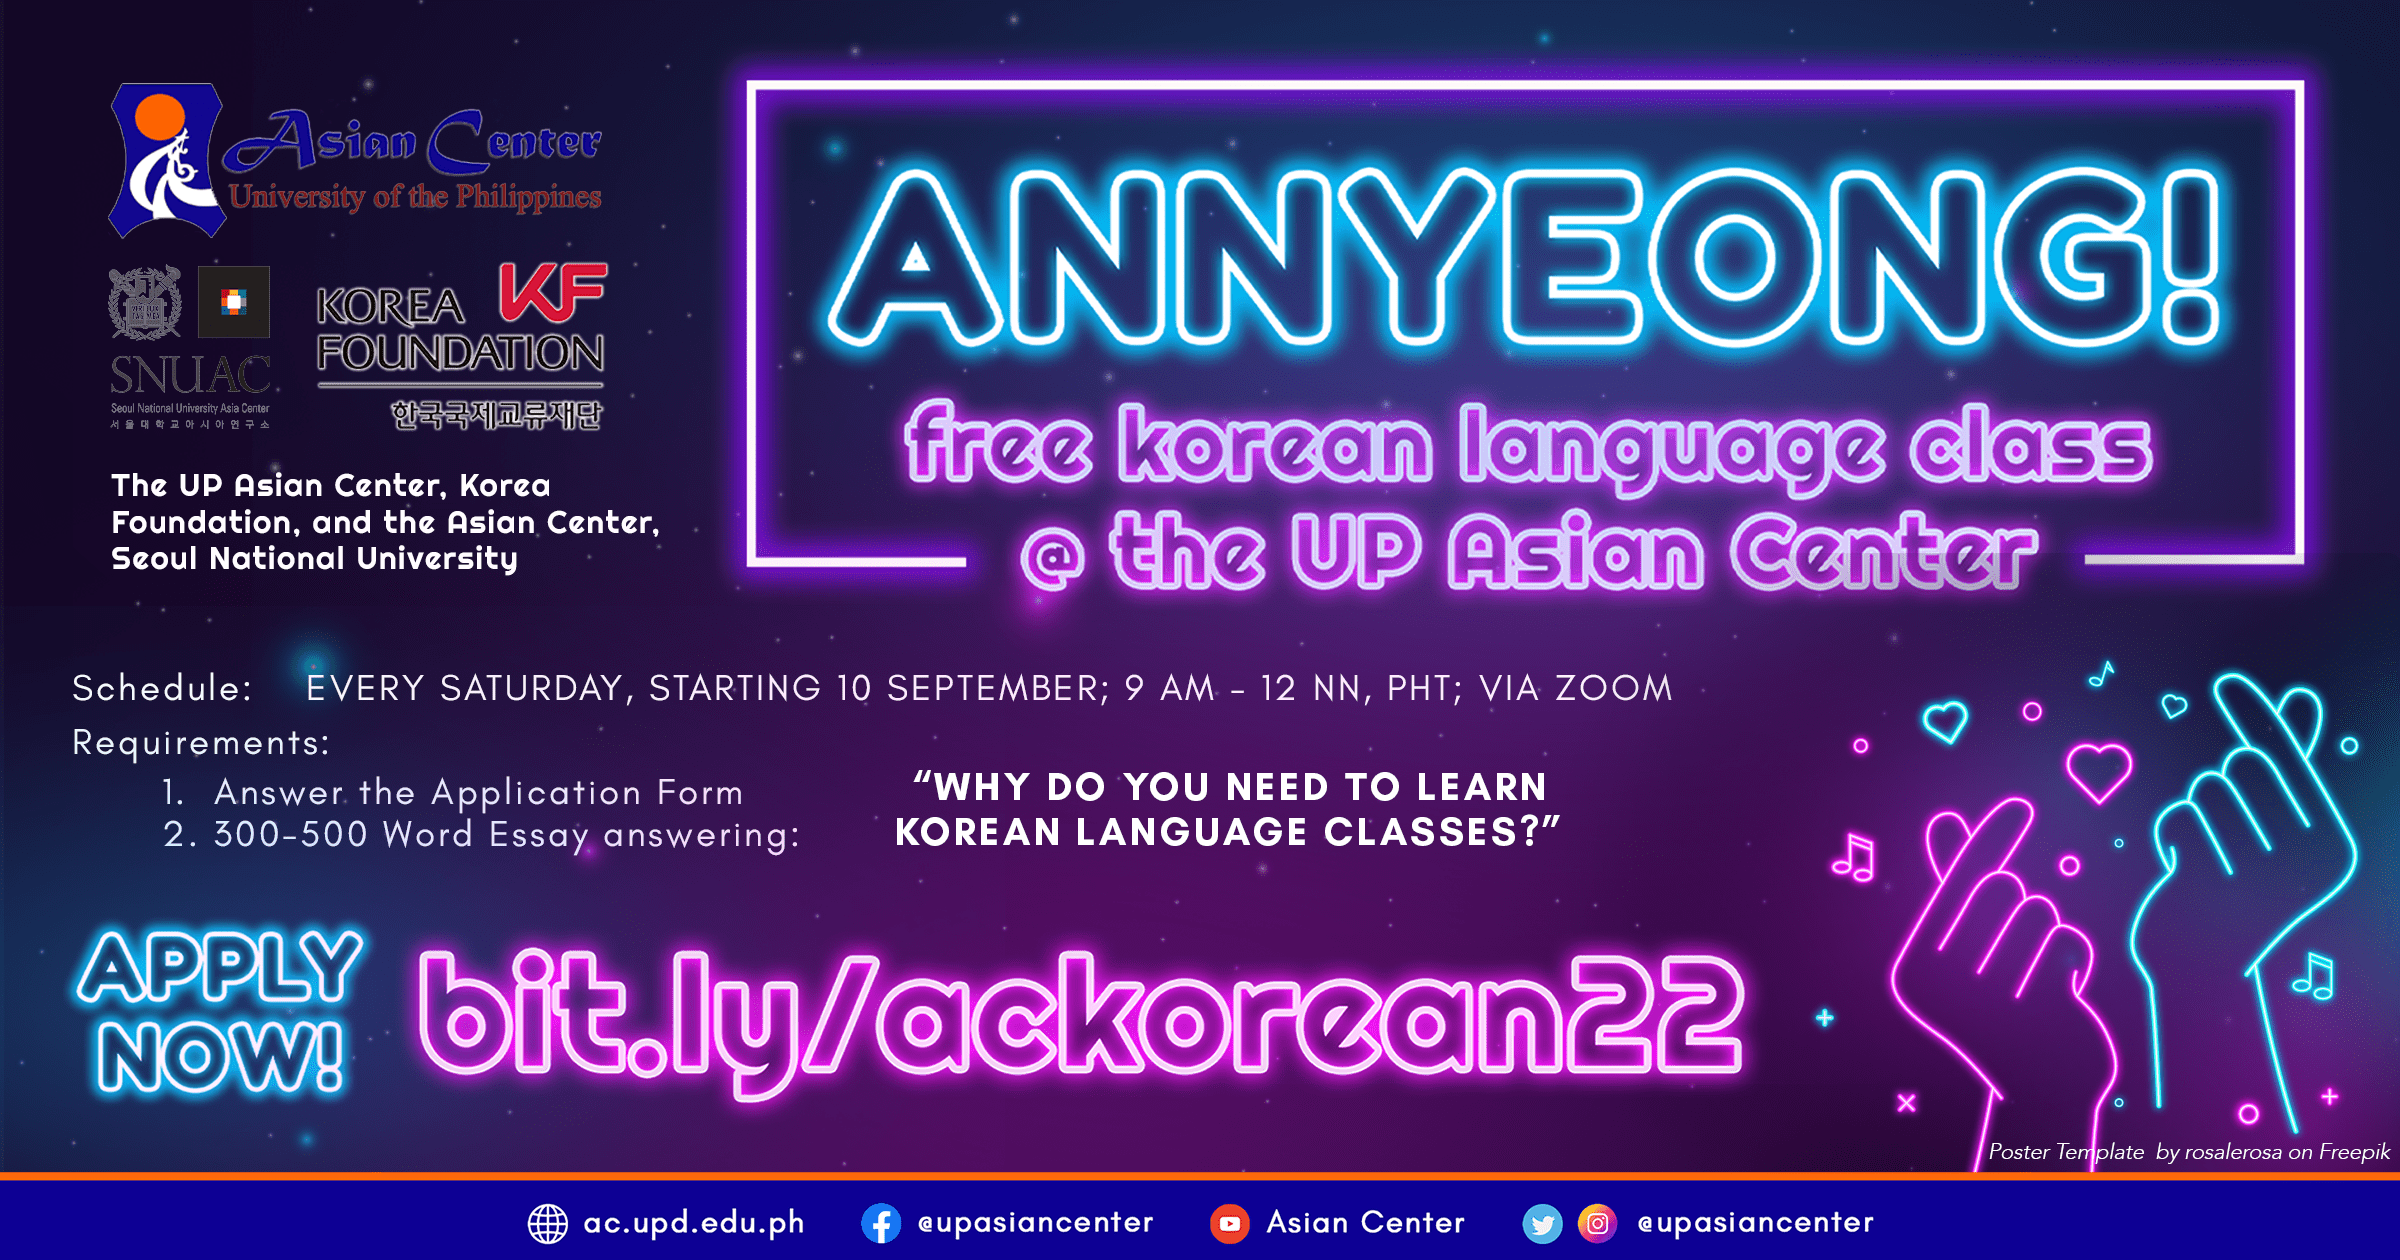 ANNYEONG!: Free Online Korean Language Classes @ UP Asian Center